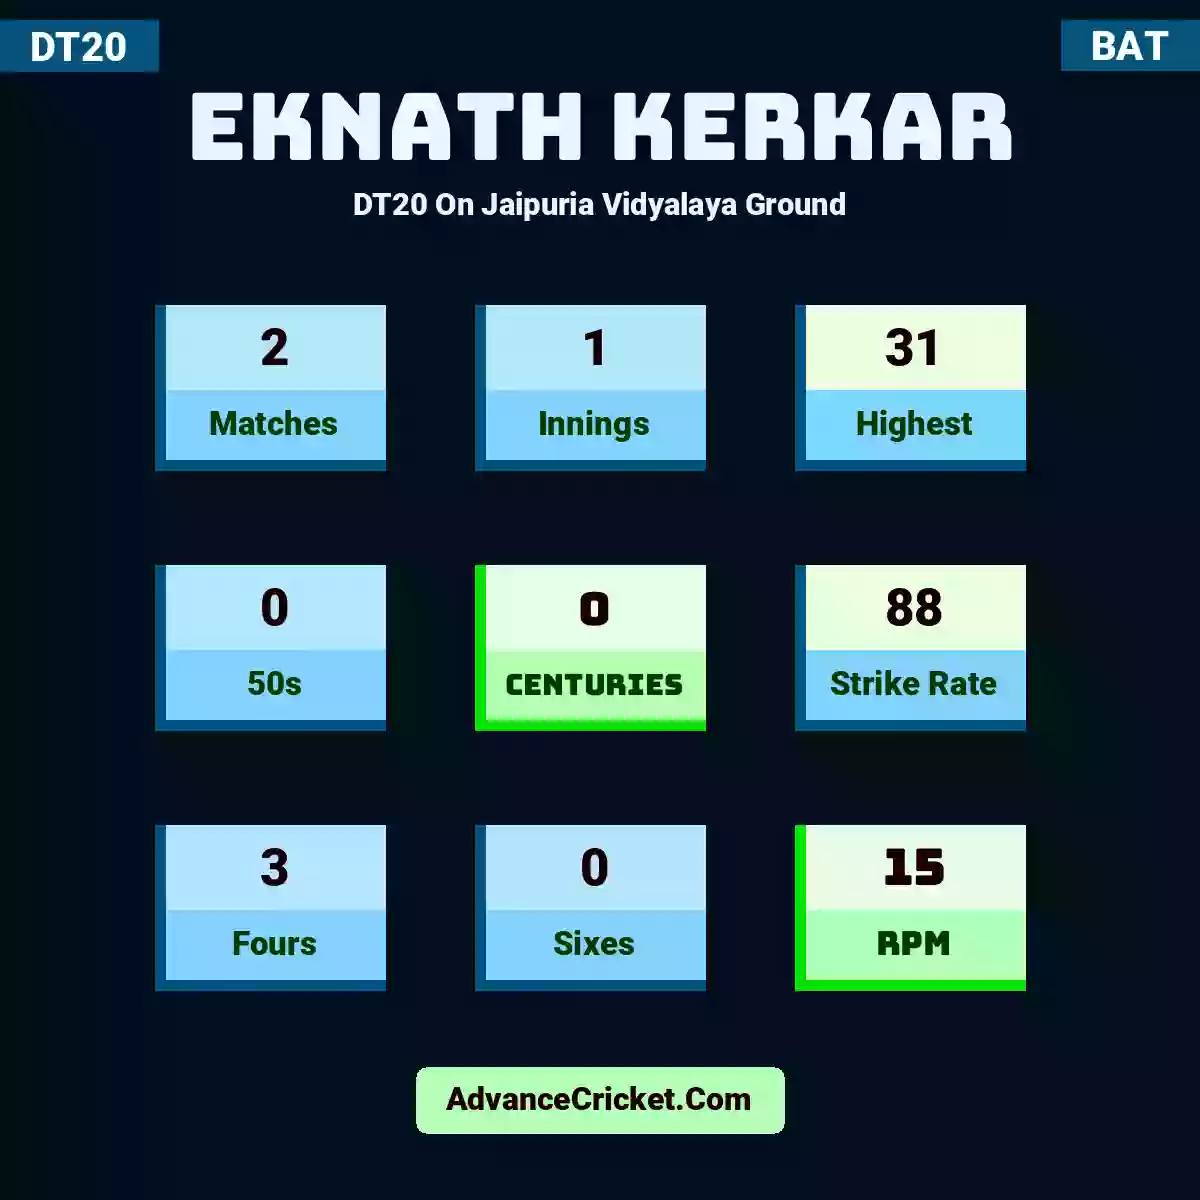 Eknath Kerkar DT20  On Jaipuria Vidyalaya Ground, Eknath Kerkar played 2 matches, scored 31 runs as highest, 0 half-centuries, and 0 centuries, with a strike rate of 88. E.Kerkar hit 3 fours and 0 sixes, with an RPM of 15.